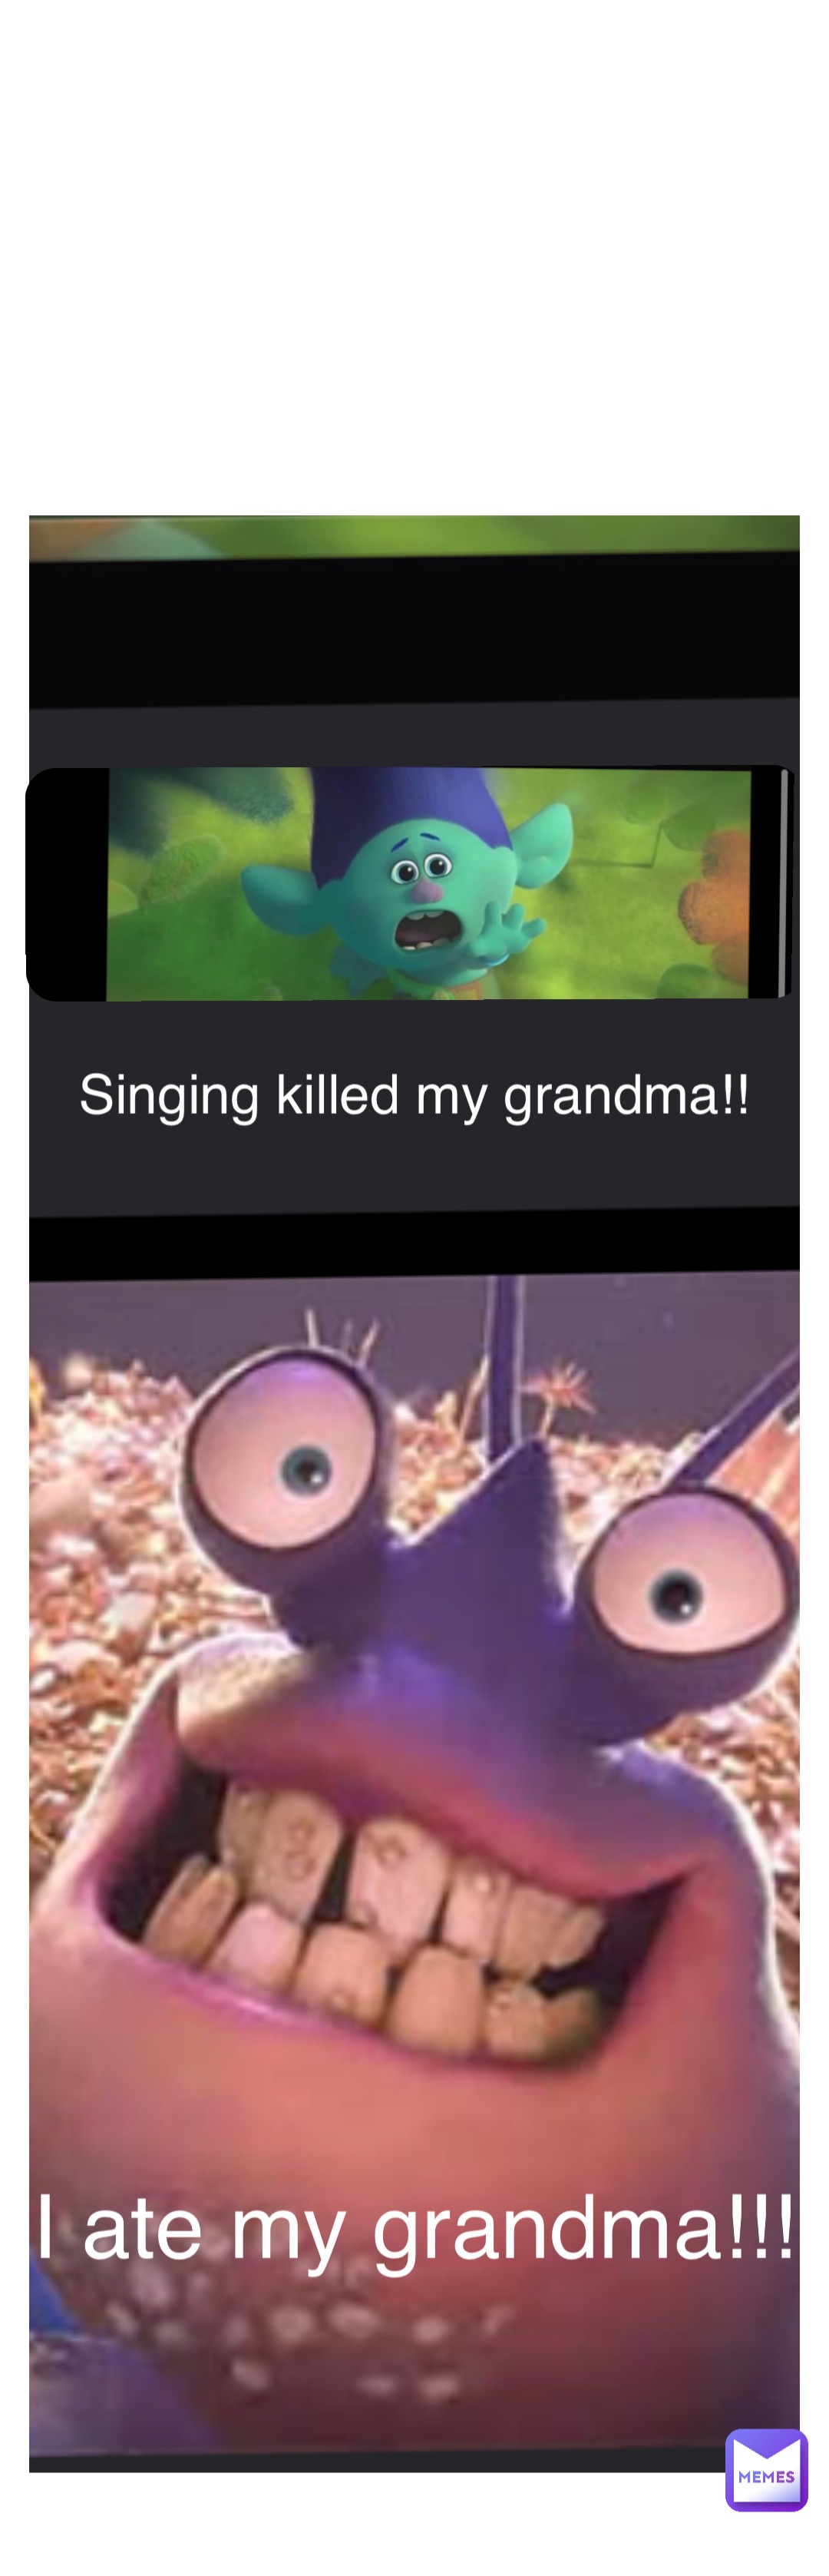 Double tap to edit Singing killed my grandma!! I ate my grandma!!!